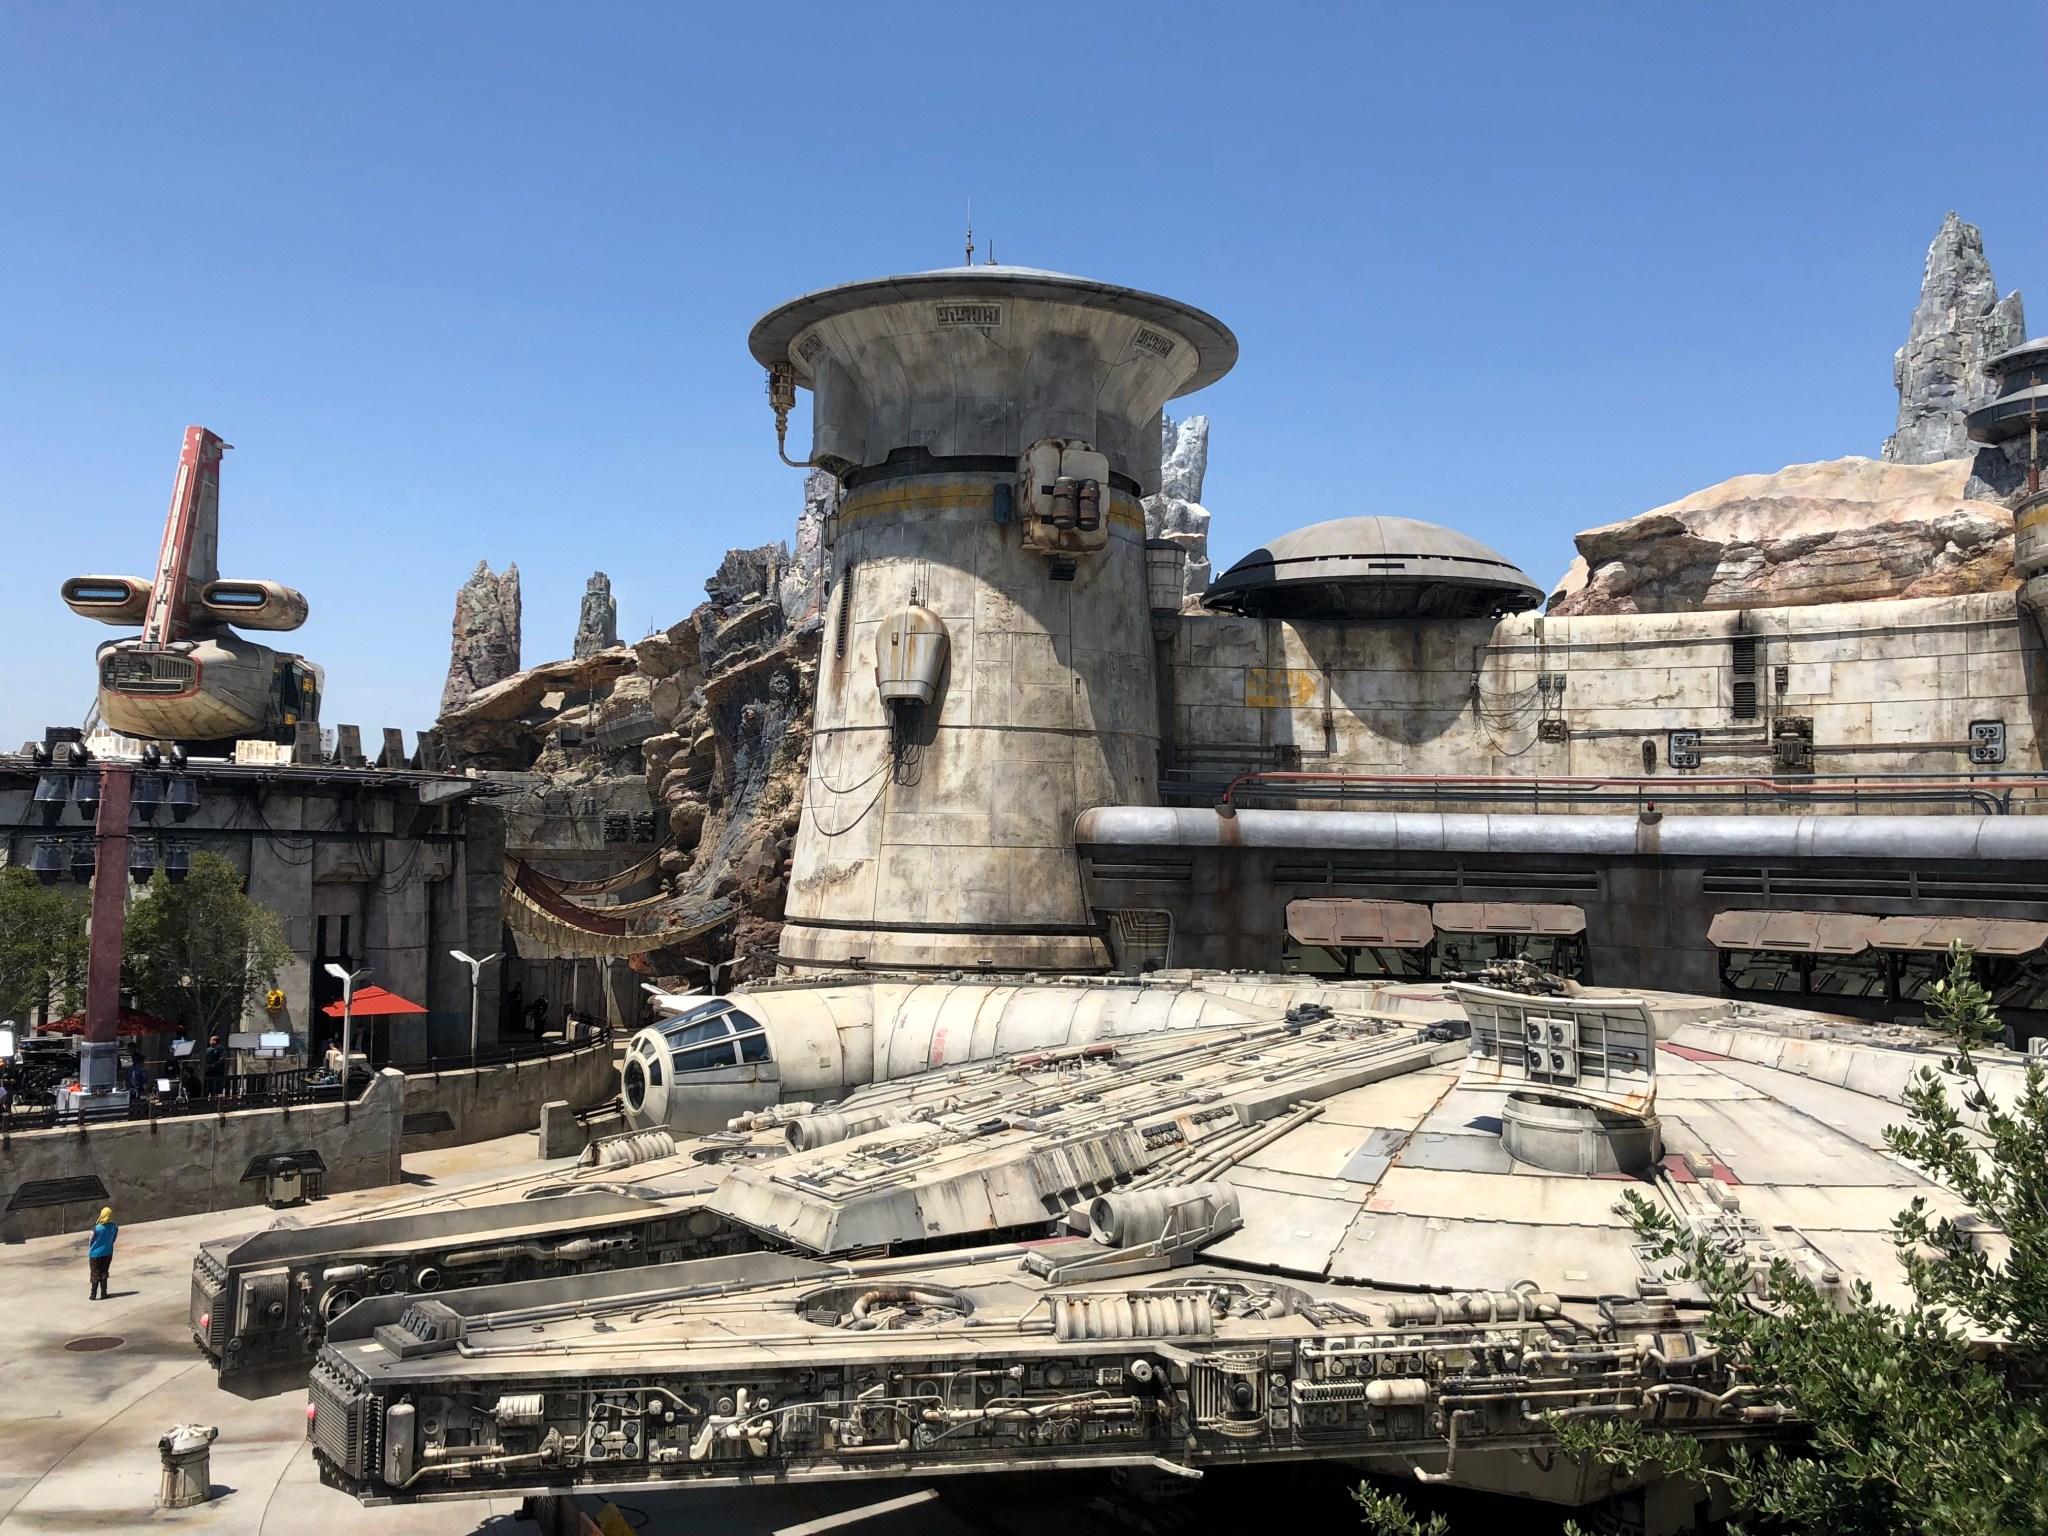 Sneak Peek: First Look at Disneyland's Star Wars: Galaxy's Edge